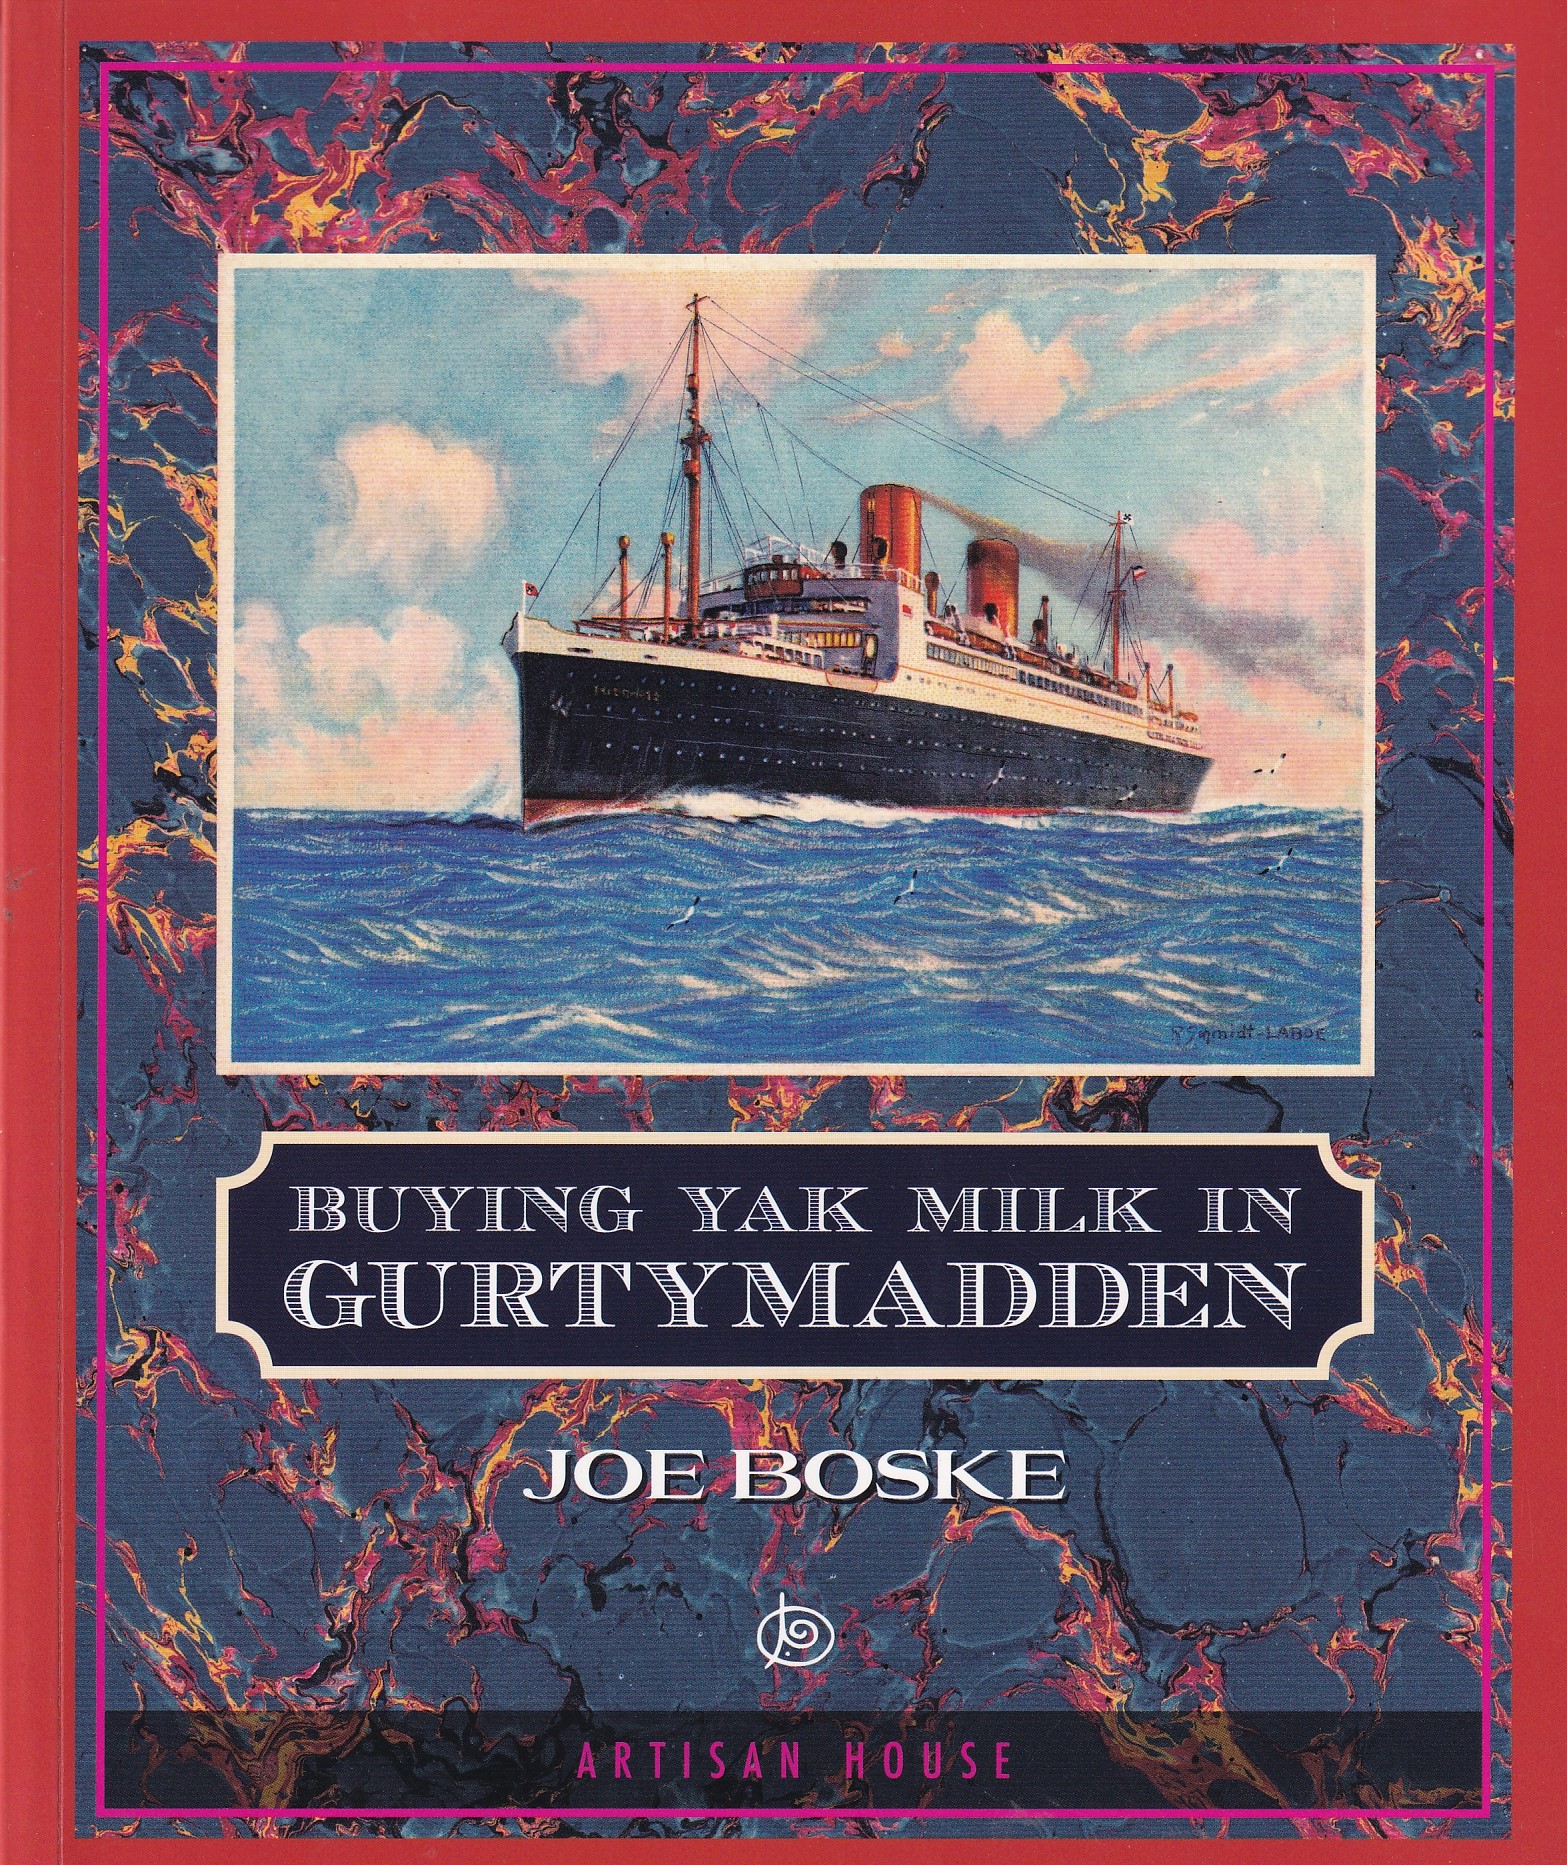 Buying Yak Milk in Gurtymadden (Signed) | Boske, Joe | Charlie Byrne's